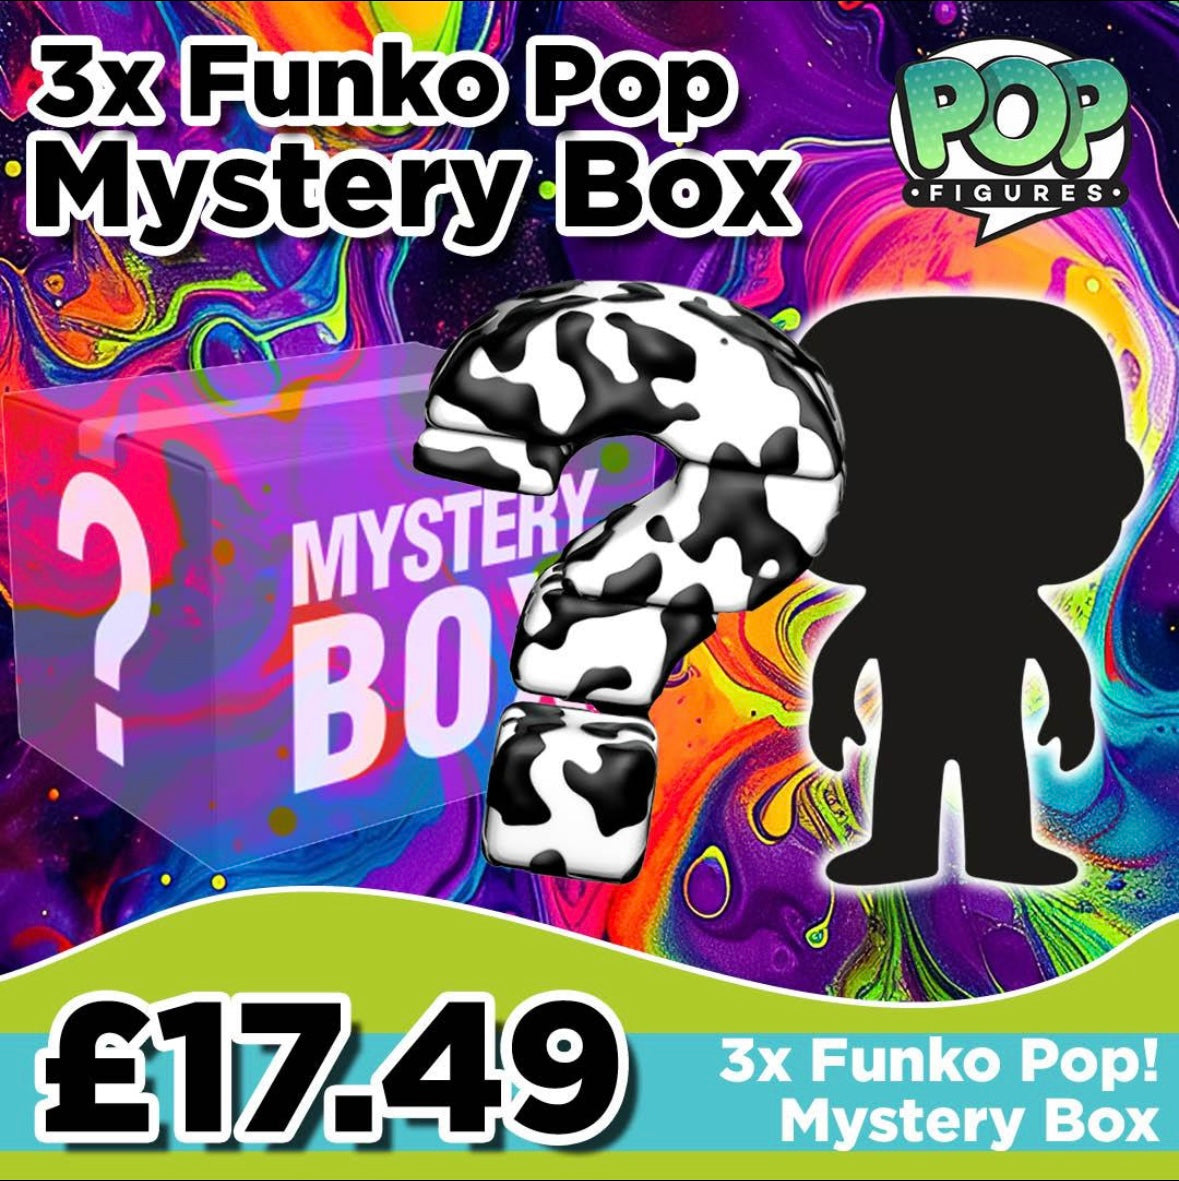 3 Funko Pop Mystery Box!